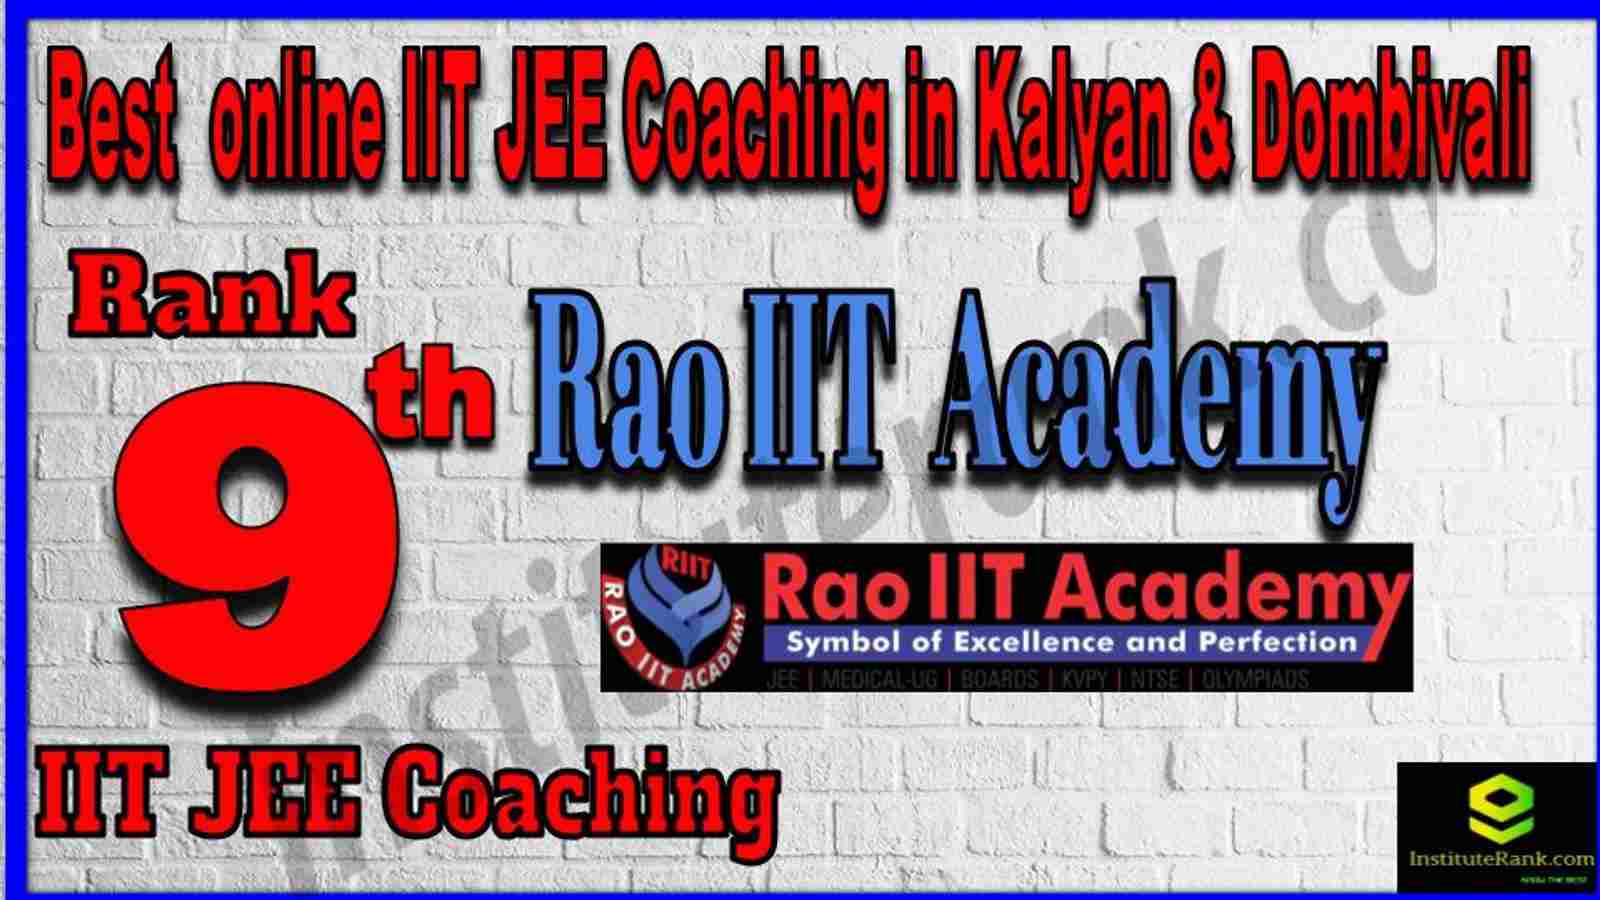 Rank 9th Best Online IIT-JEE Coaching Kalyan & Dombivali 